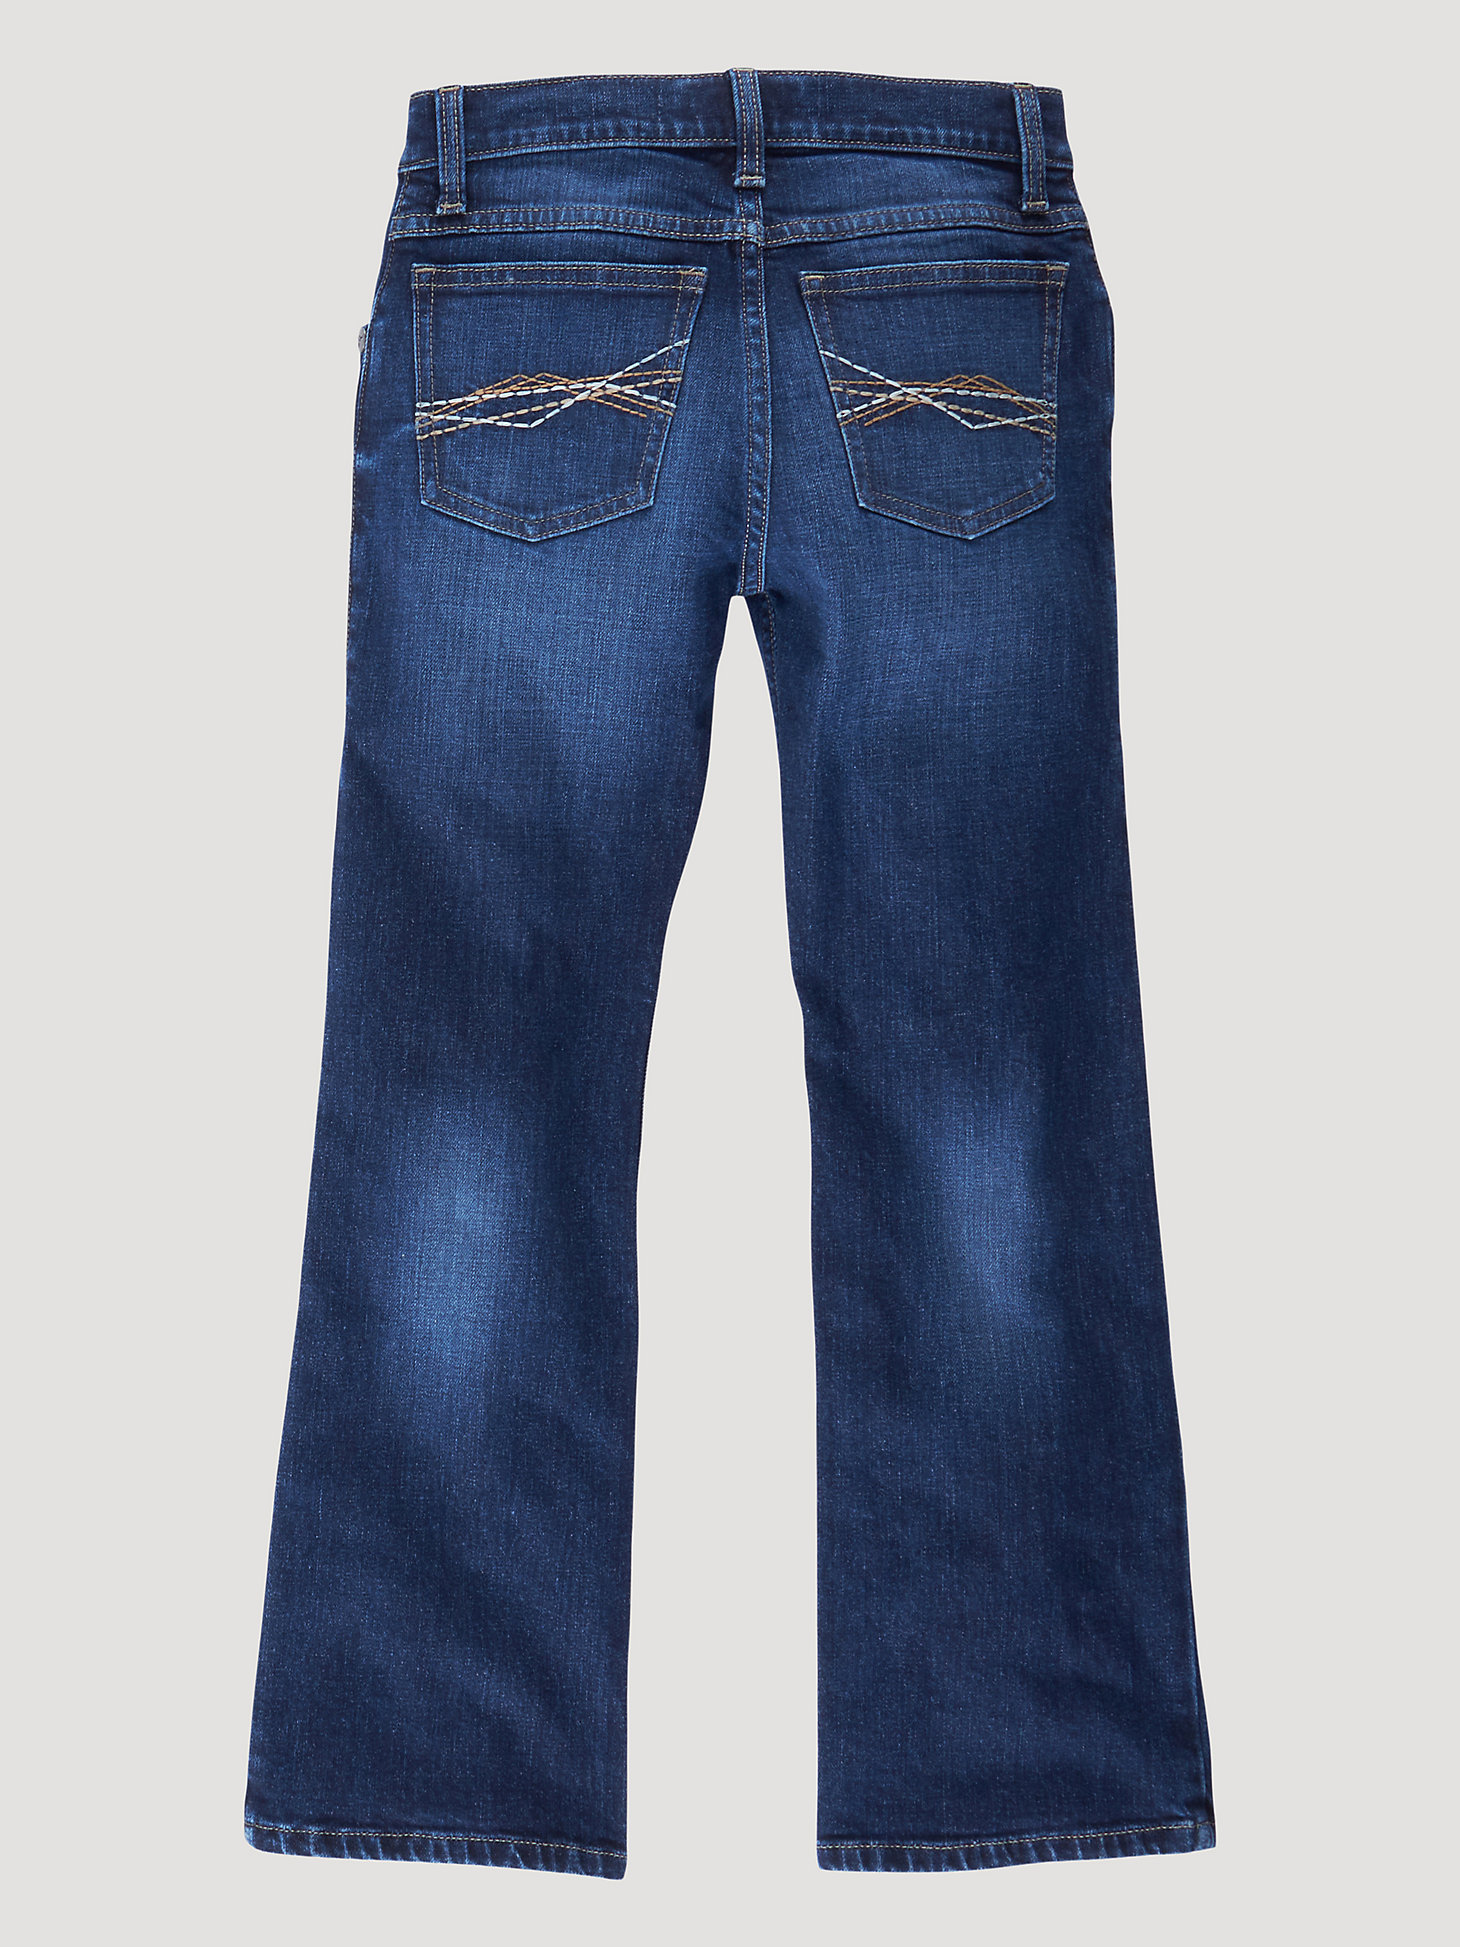 Boy's Wrangler® 20X® No. 42 Vintage Bootcut Slim Fit Jean (4-20) in Valley Bluff alternative view 1